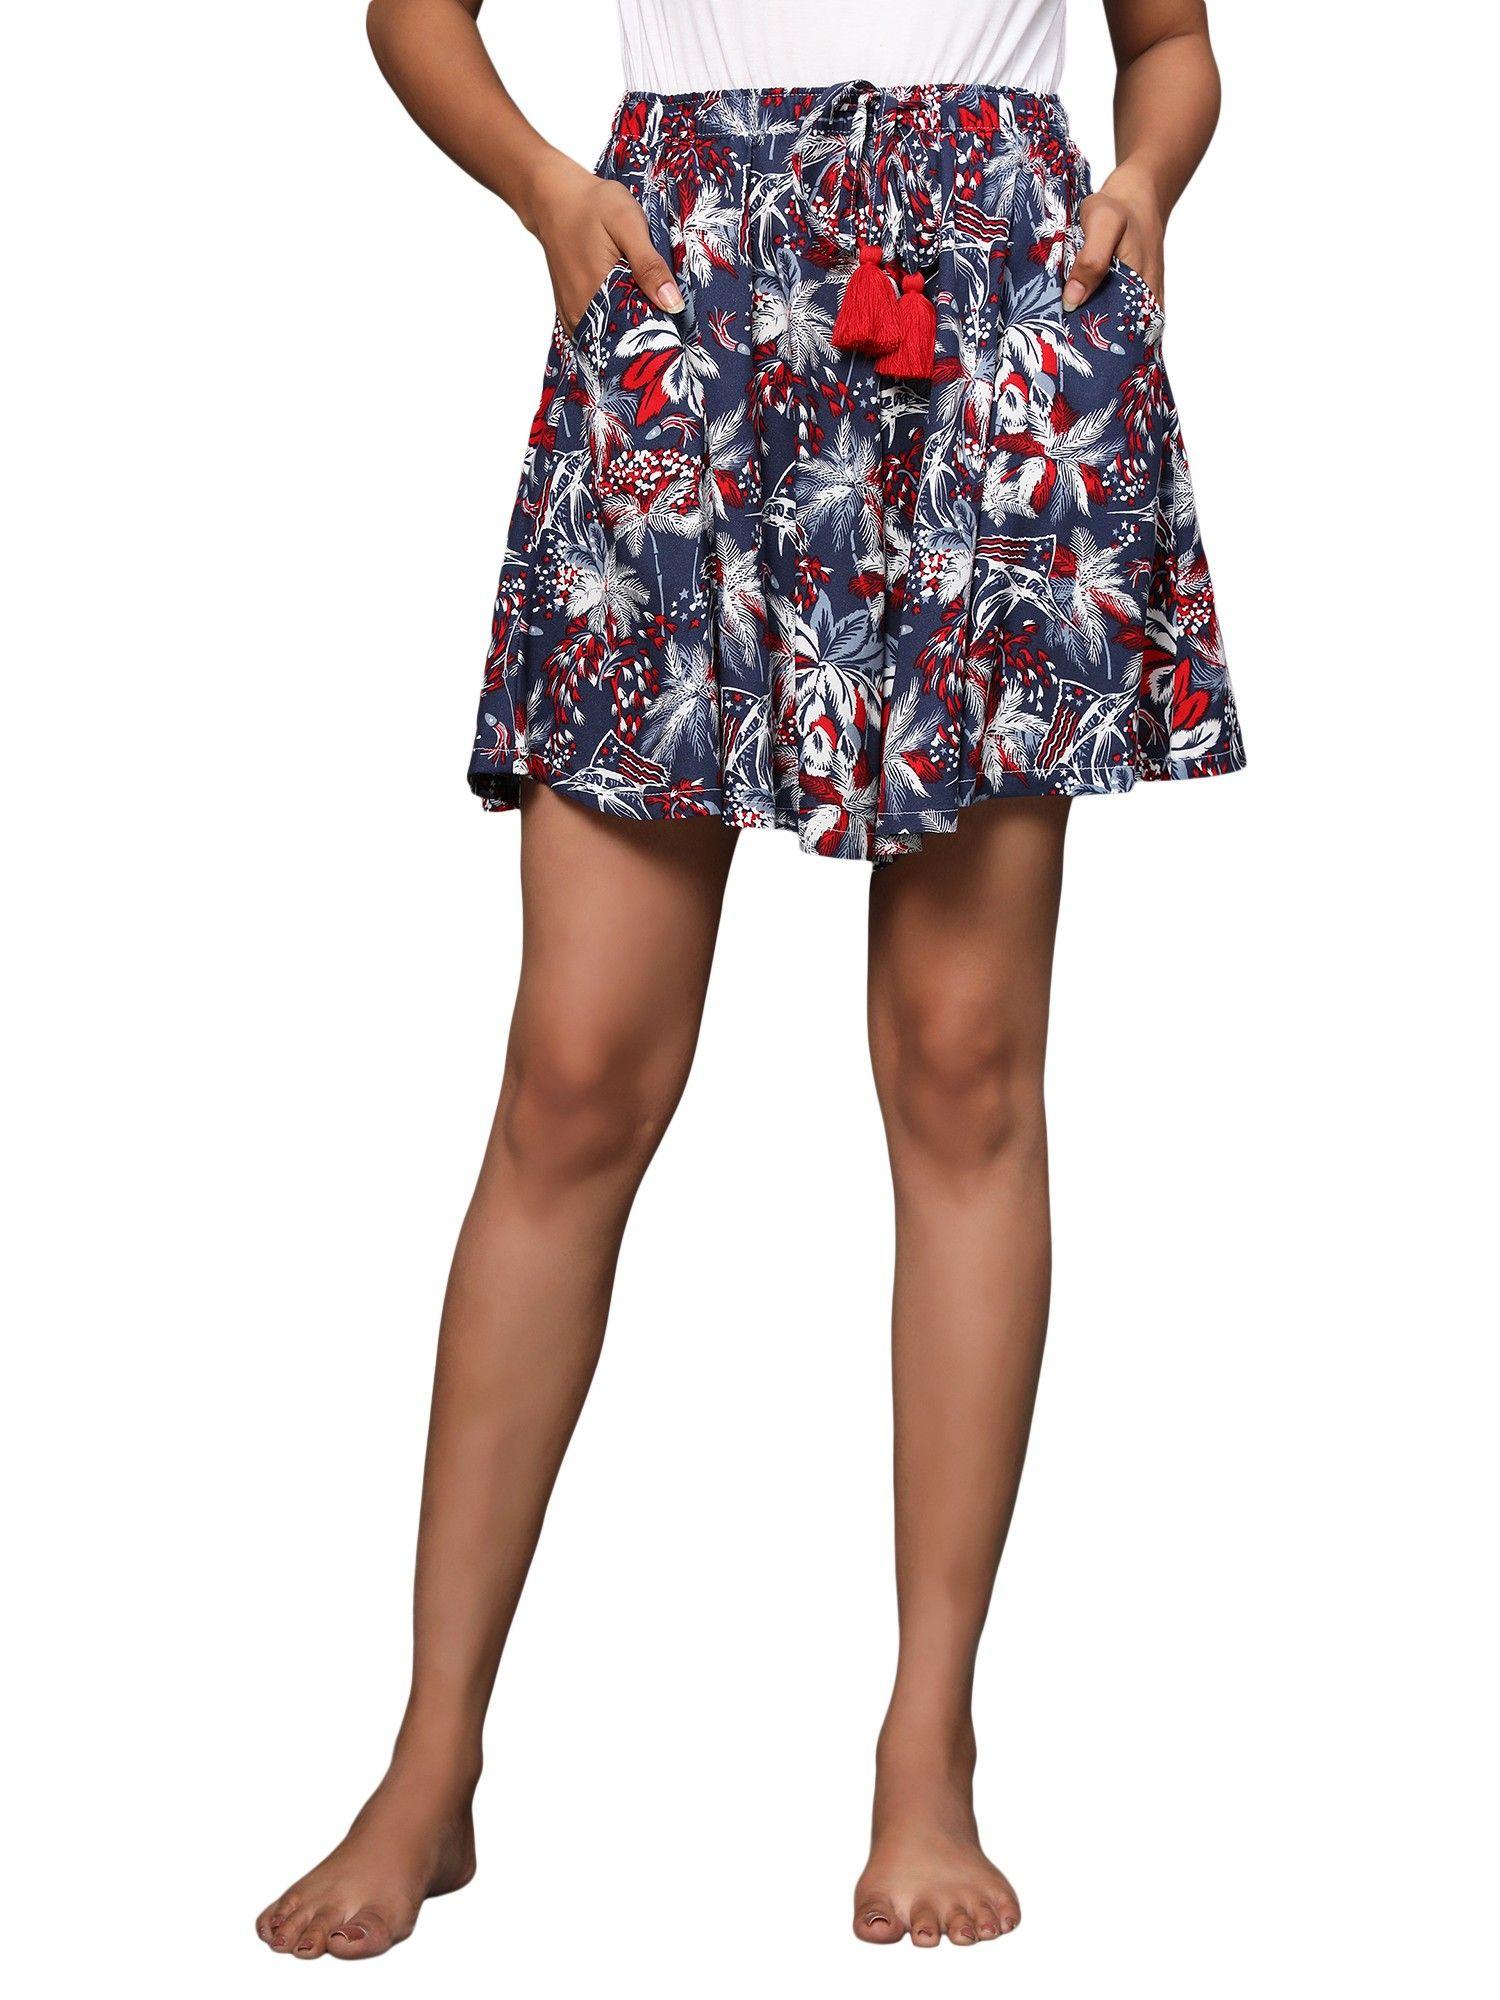 culottes-shorts-for-women--multi--color-floral